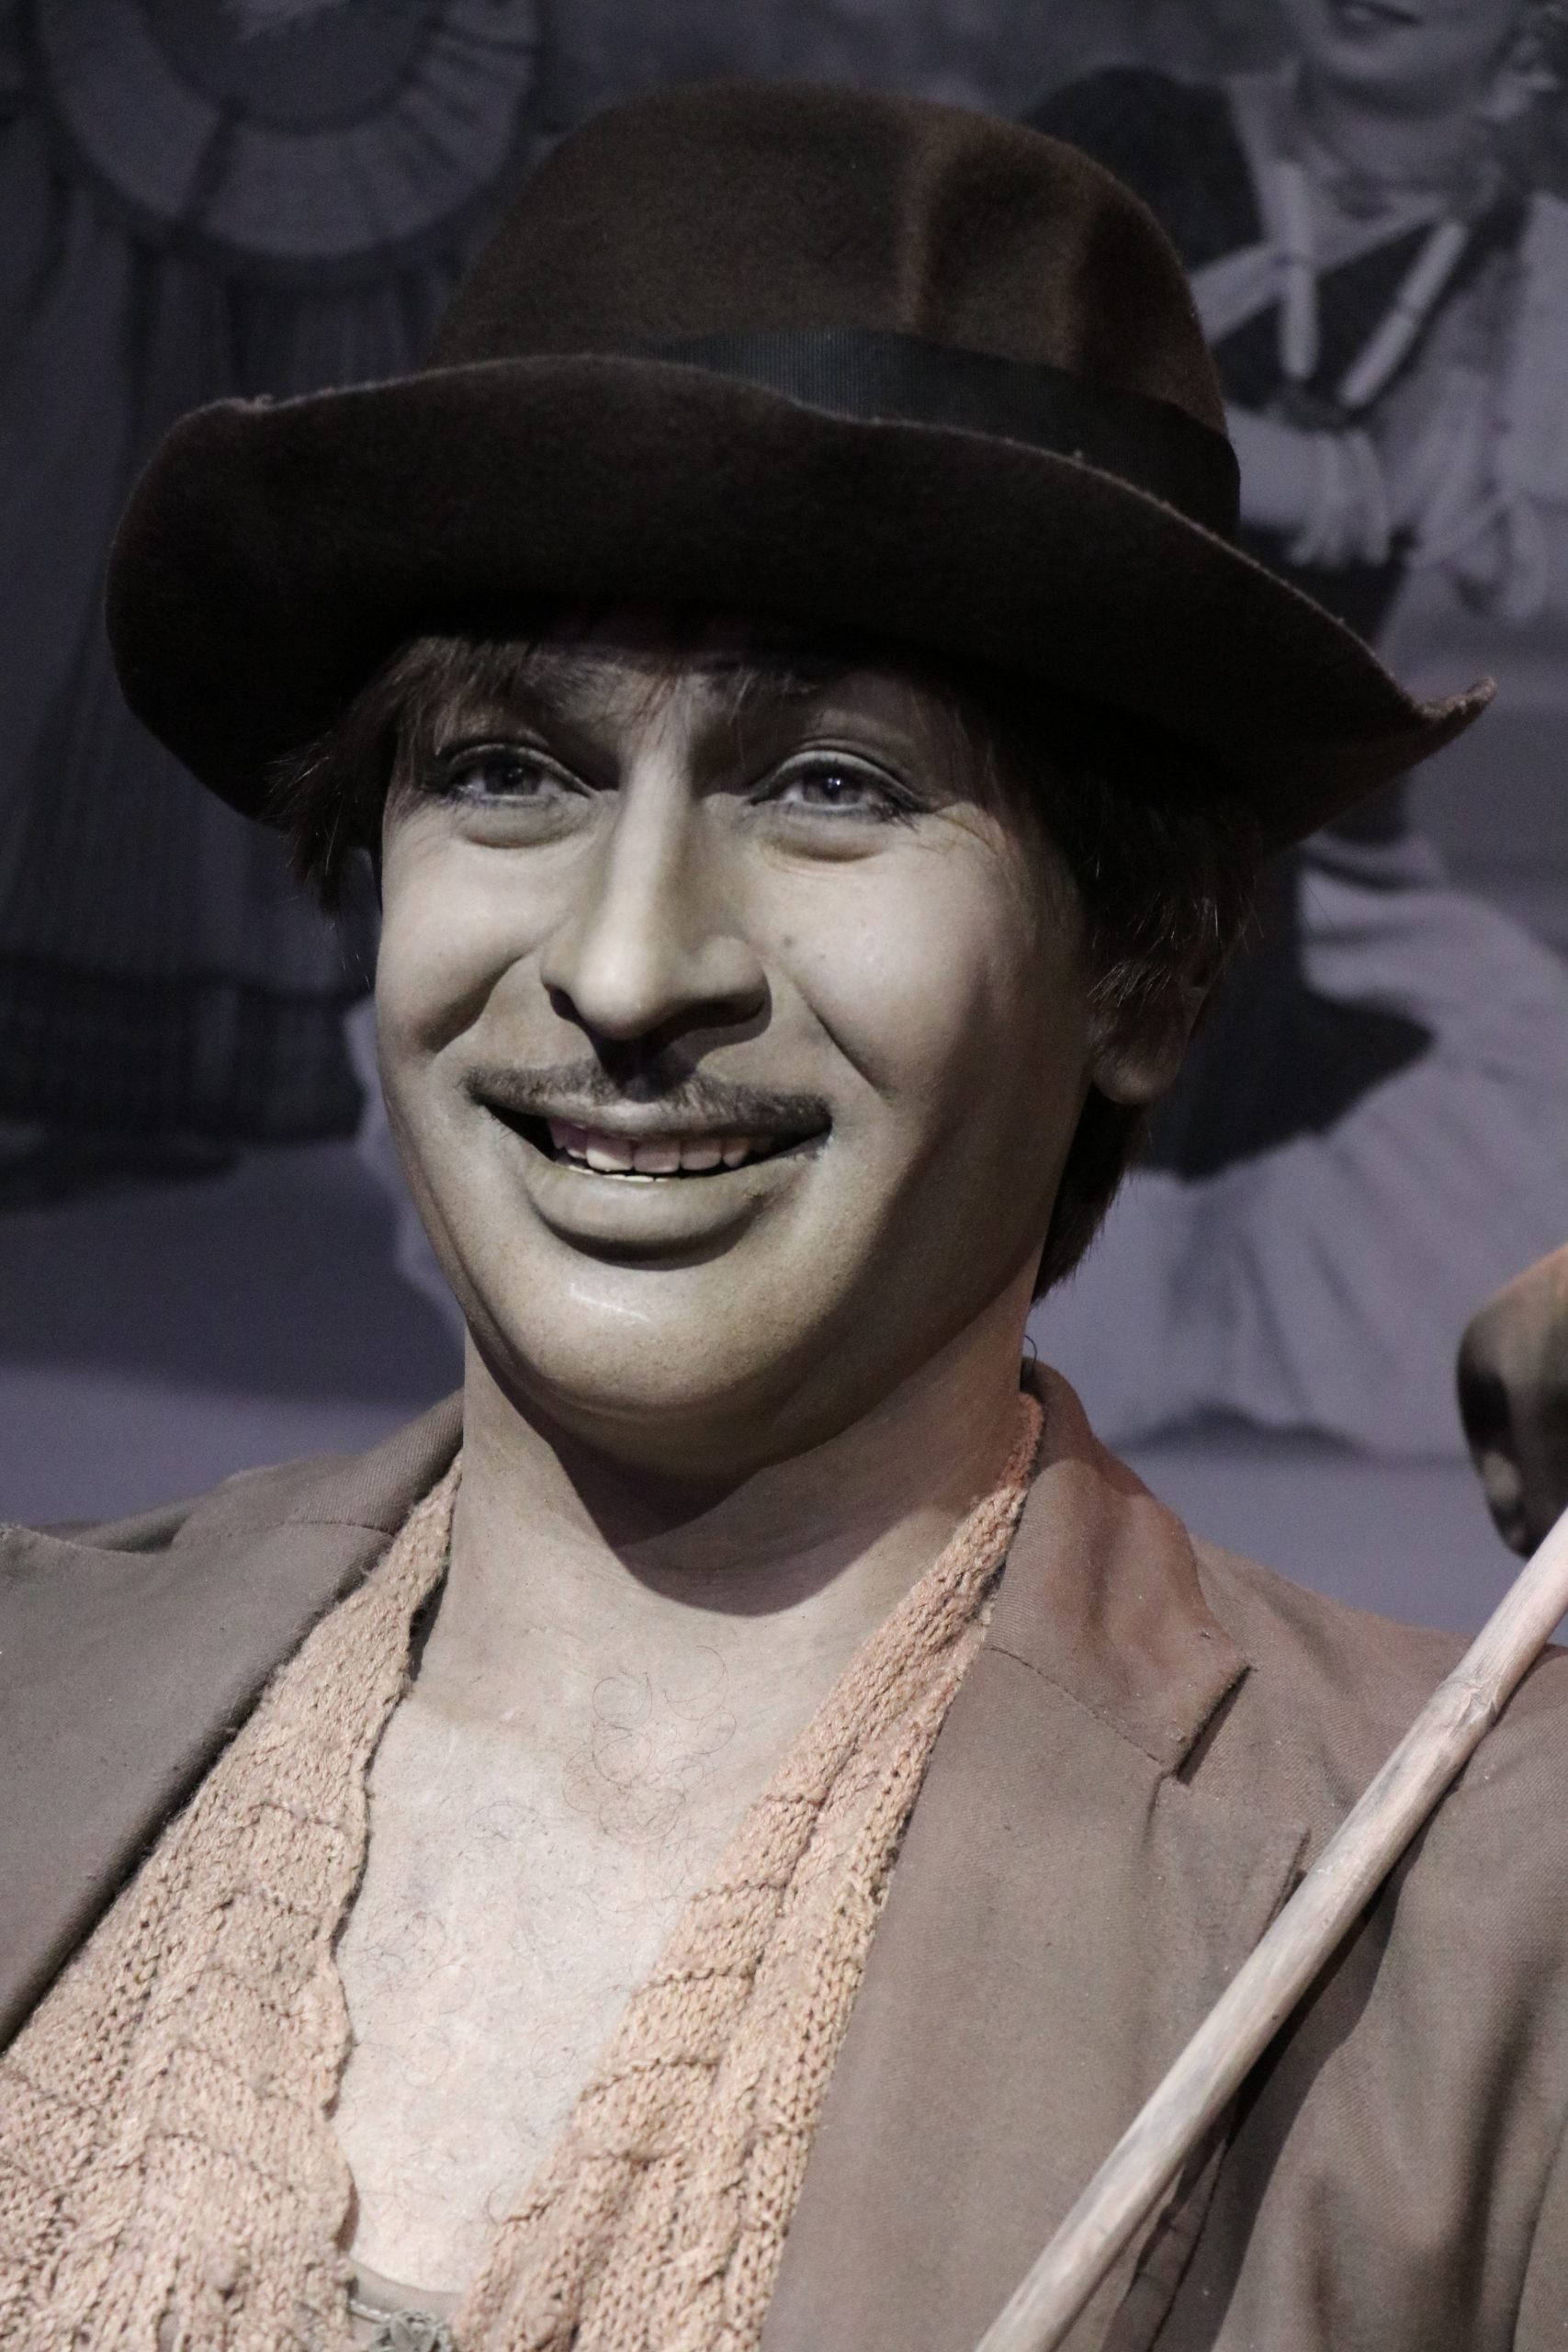 Wax statue of a man